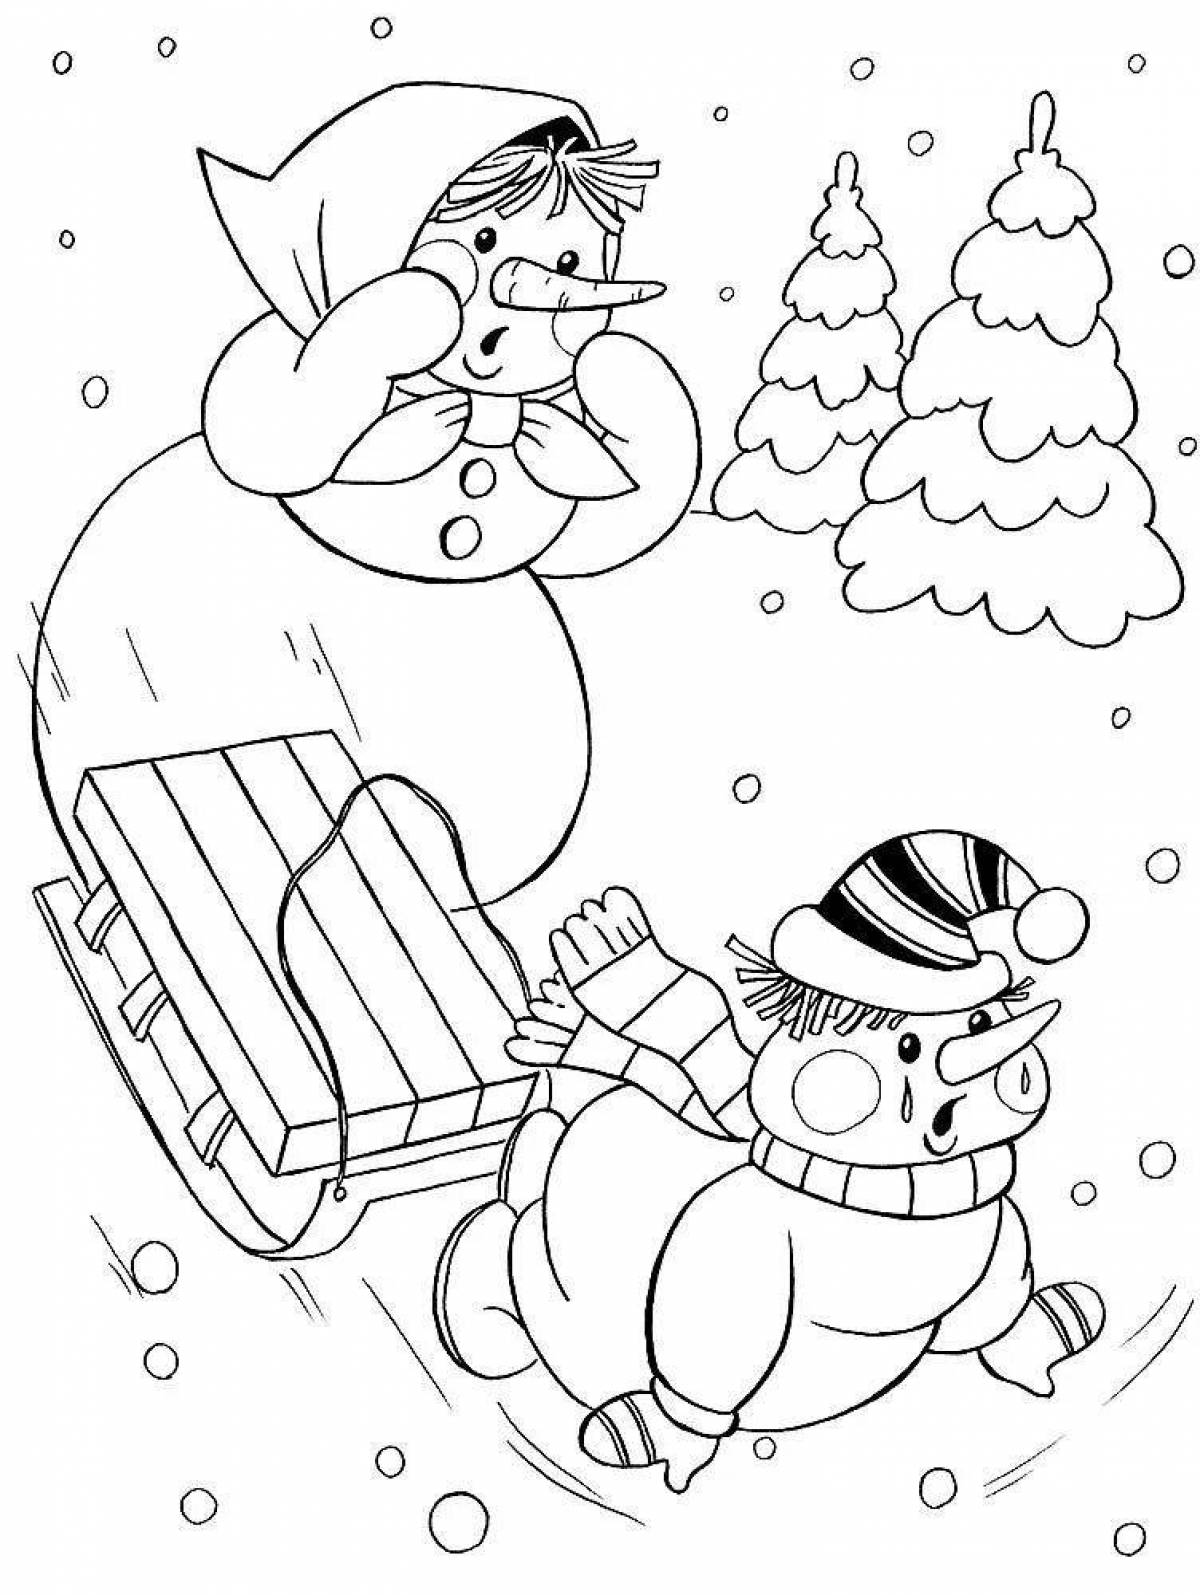 Playful snowman coloring book